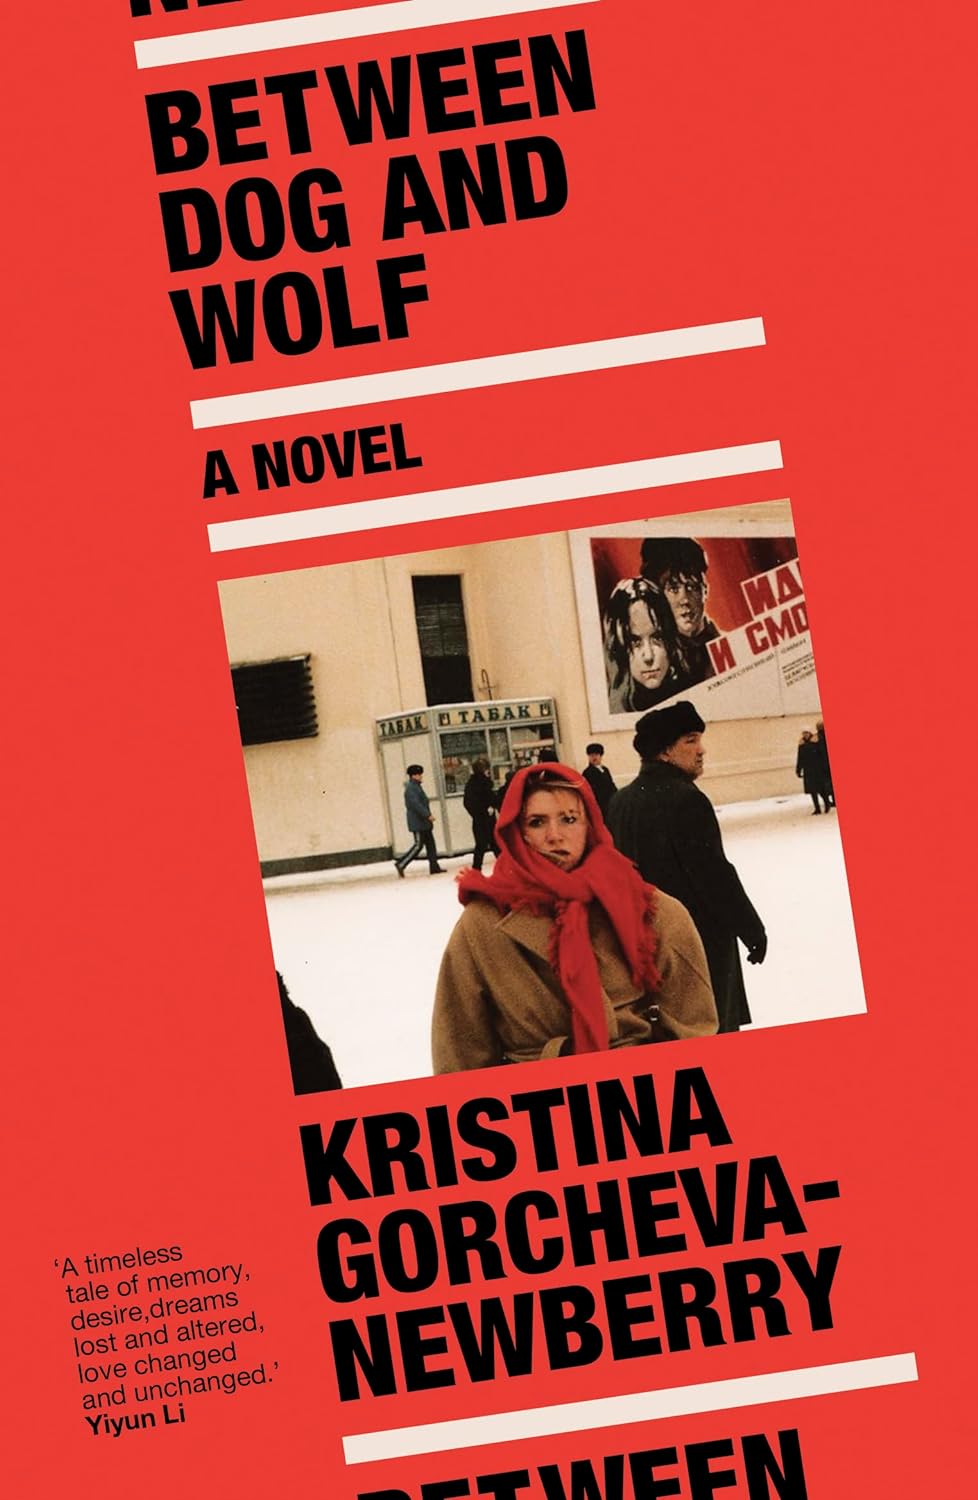 Between Dog And Wolf by Kristina Gorcheva-Newberry